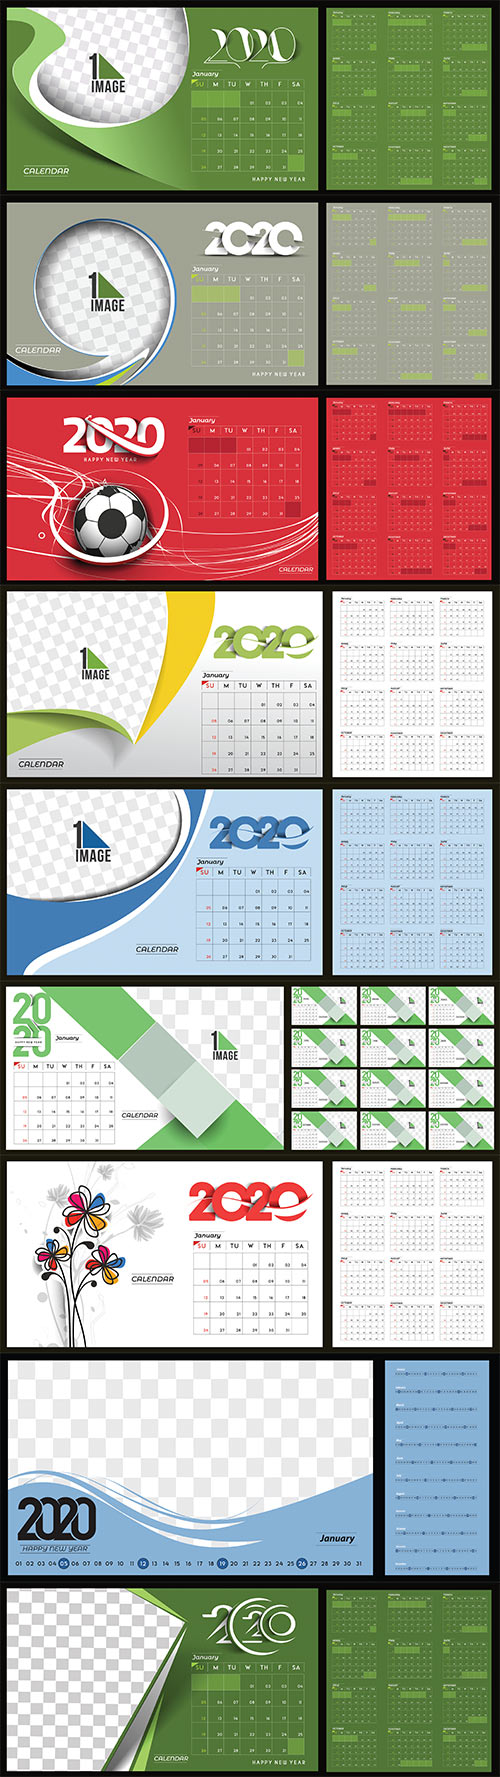 Happy new year 2020 Calendar vector illustration